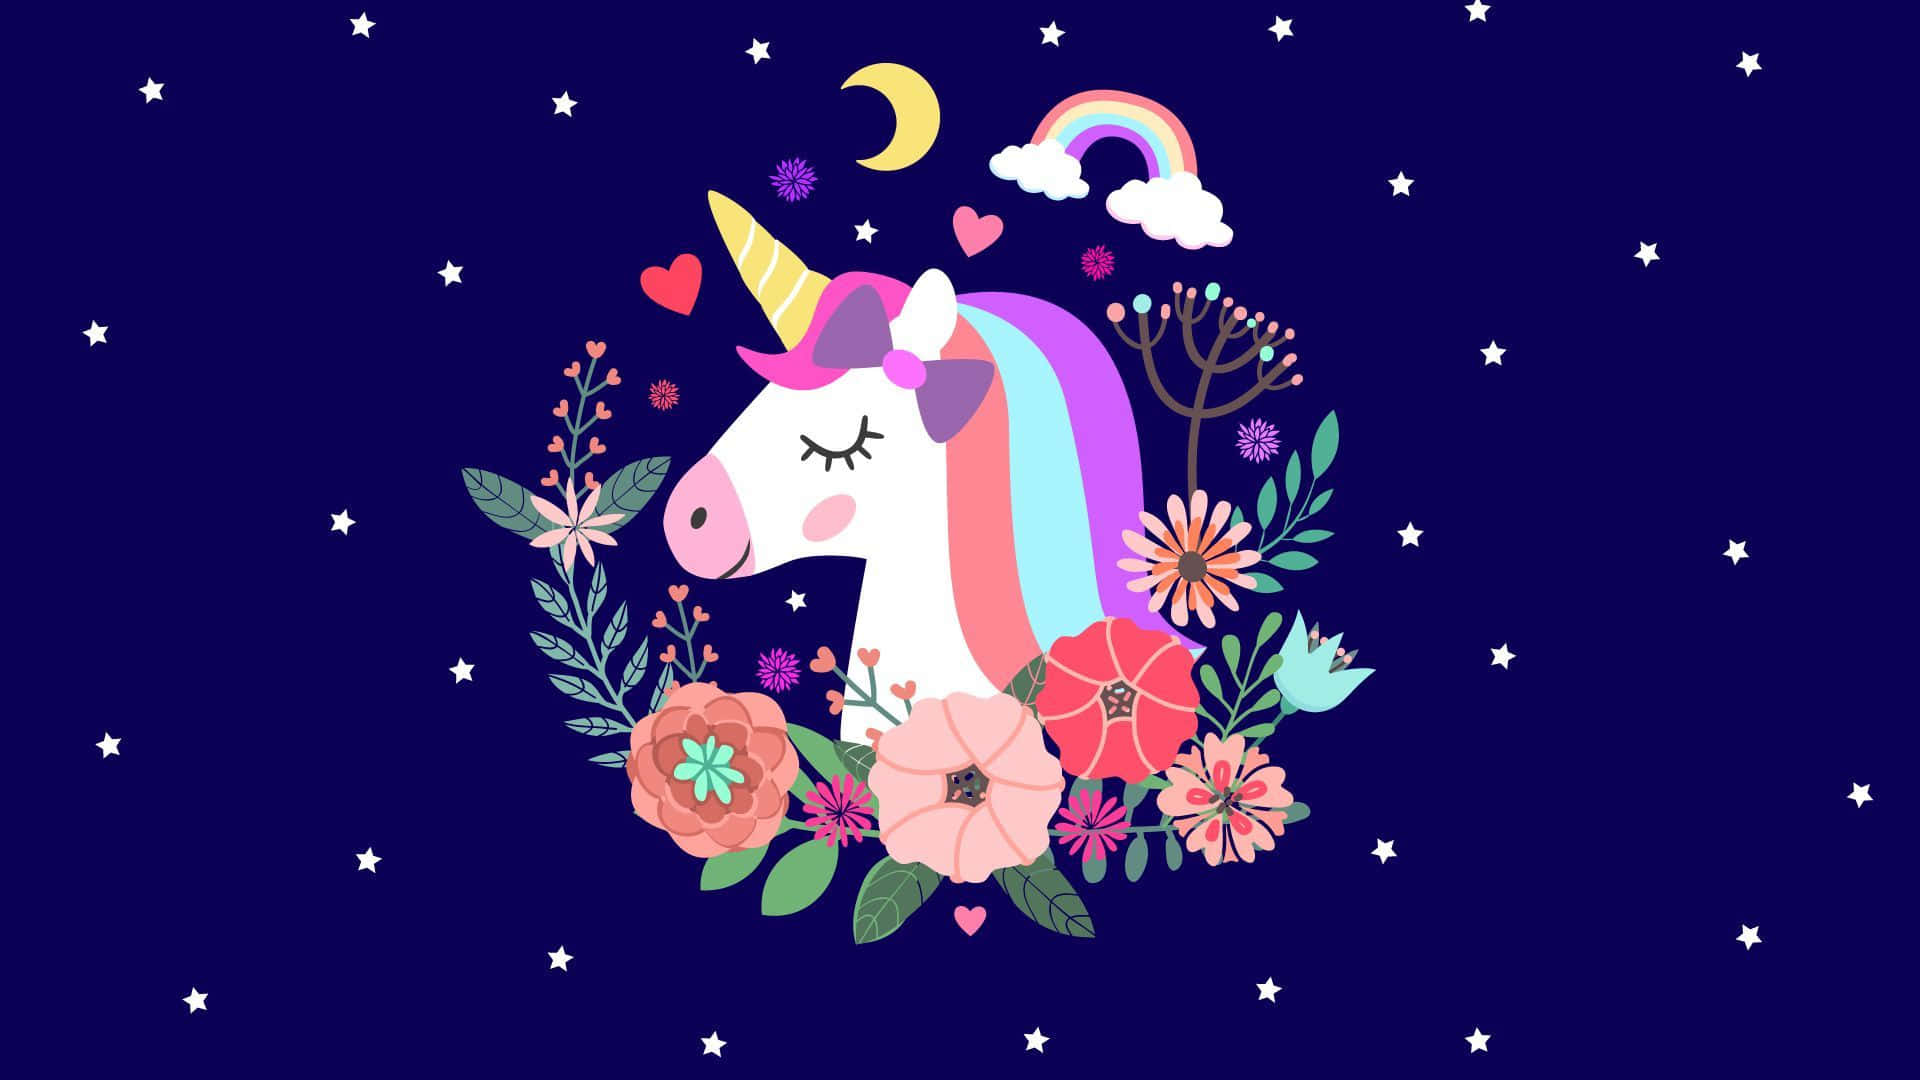 Dreamy Magical Unicorn at Desktop Wallpaper